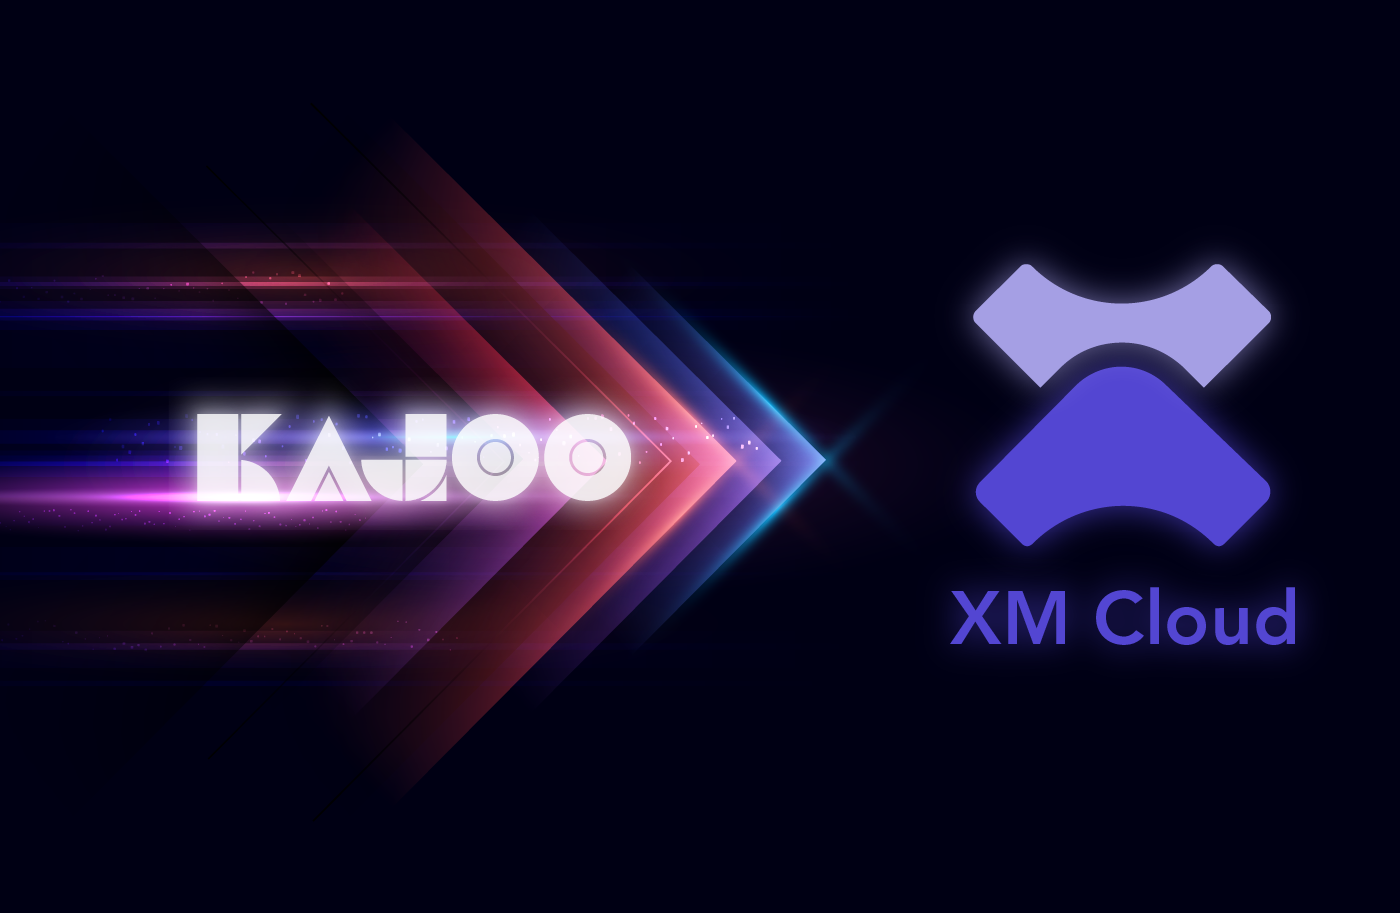 Sitecore XM Cloud logo on dark background